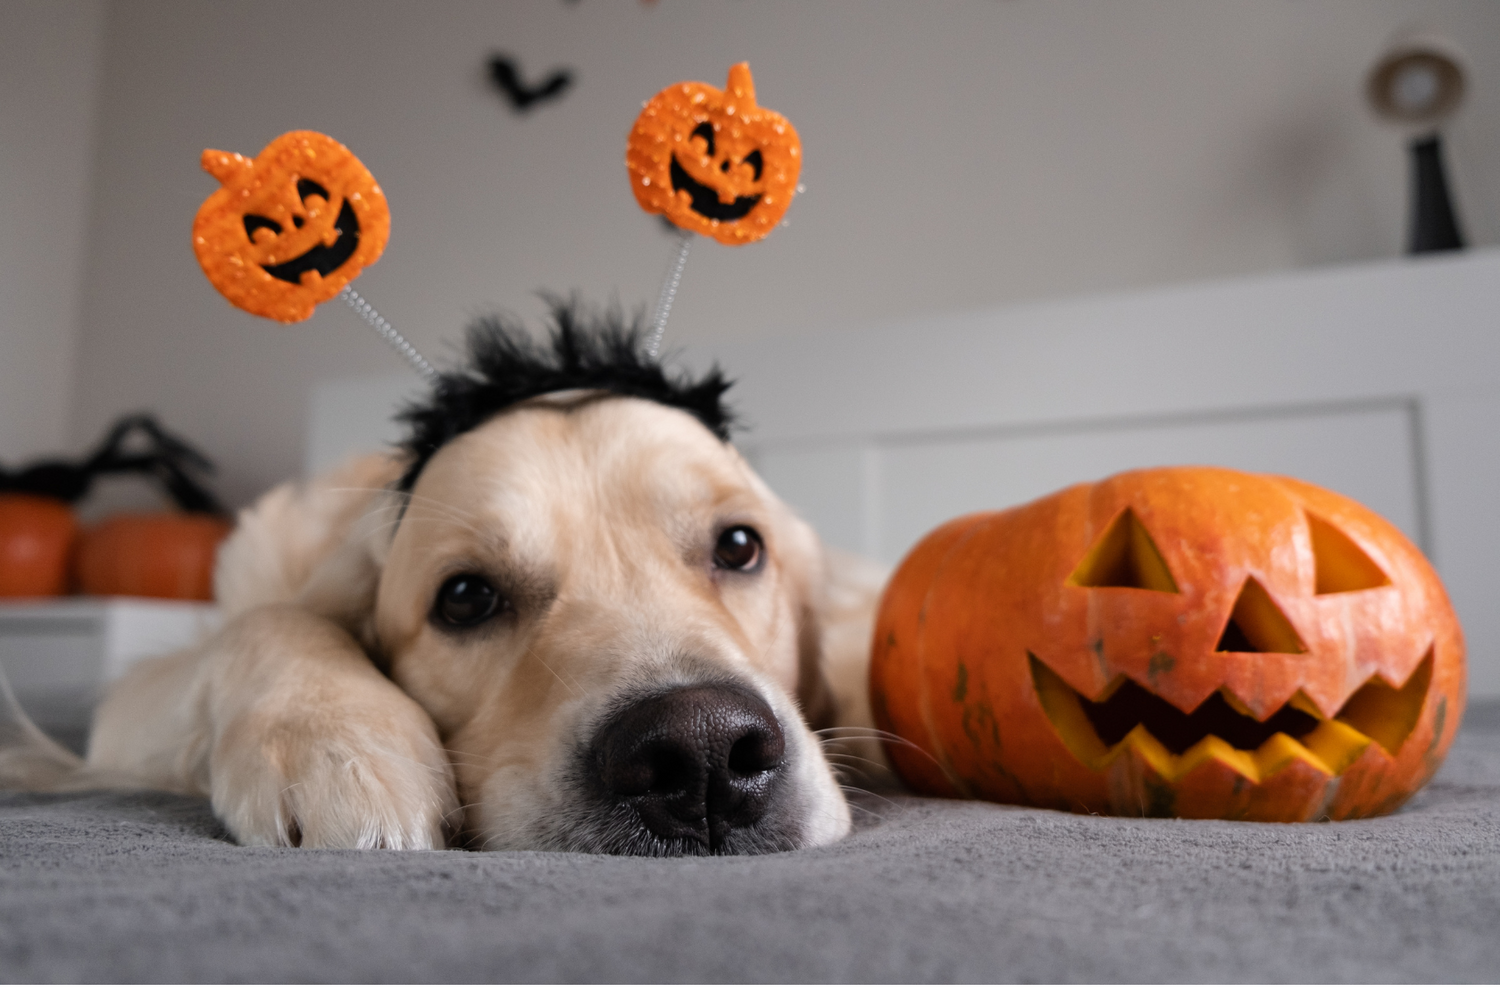 Dog wearing pumpkin head band next to carved pumpkin